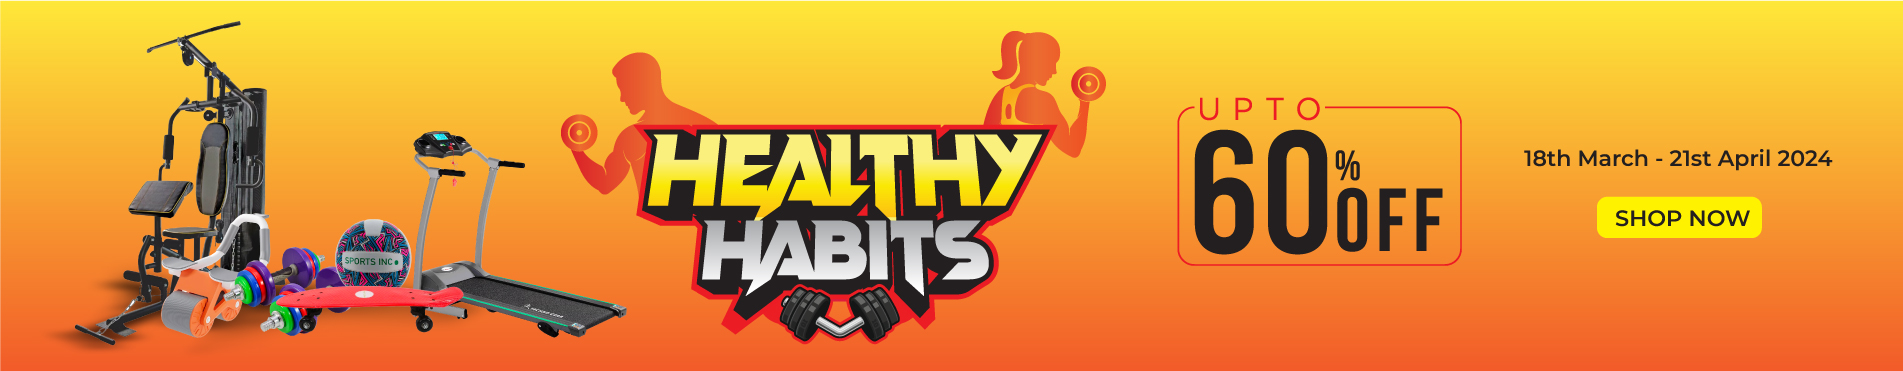 Healthy Habits 21-Apr-2024 